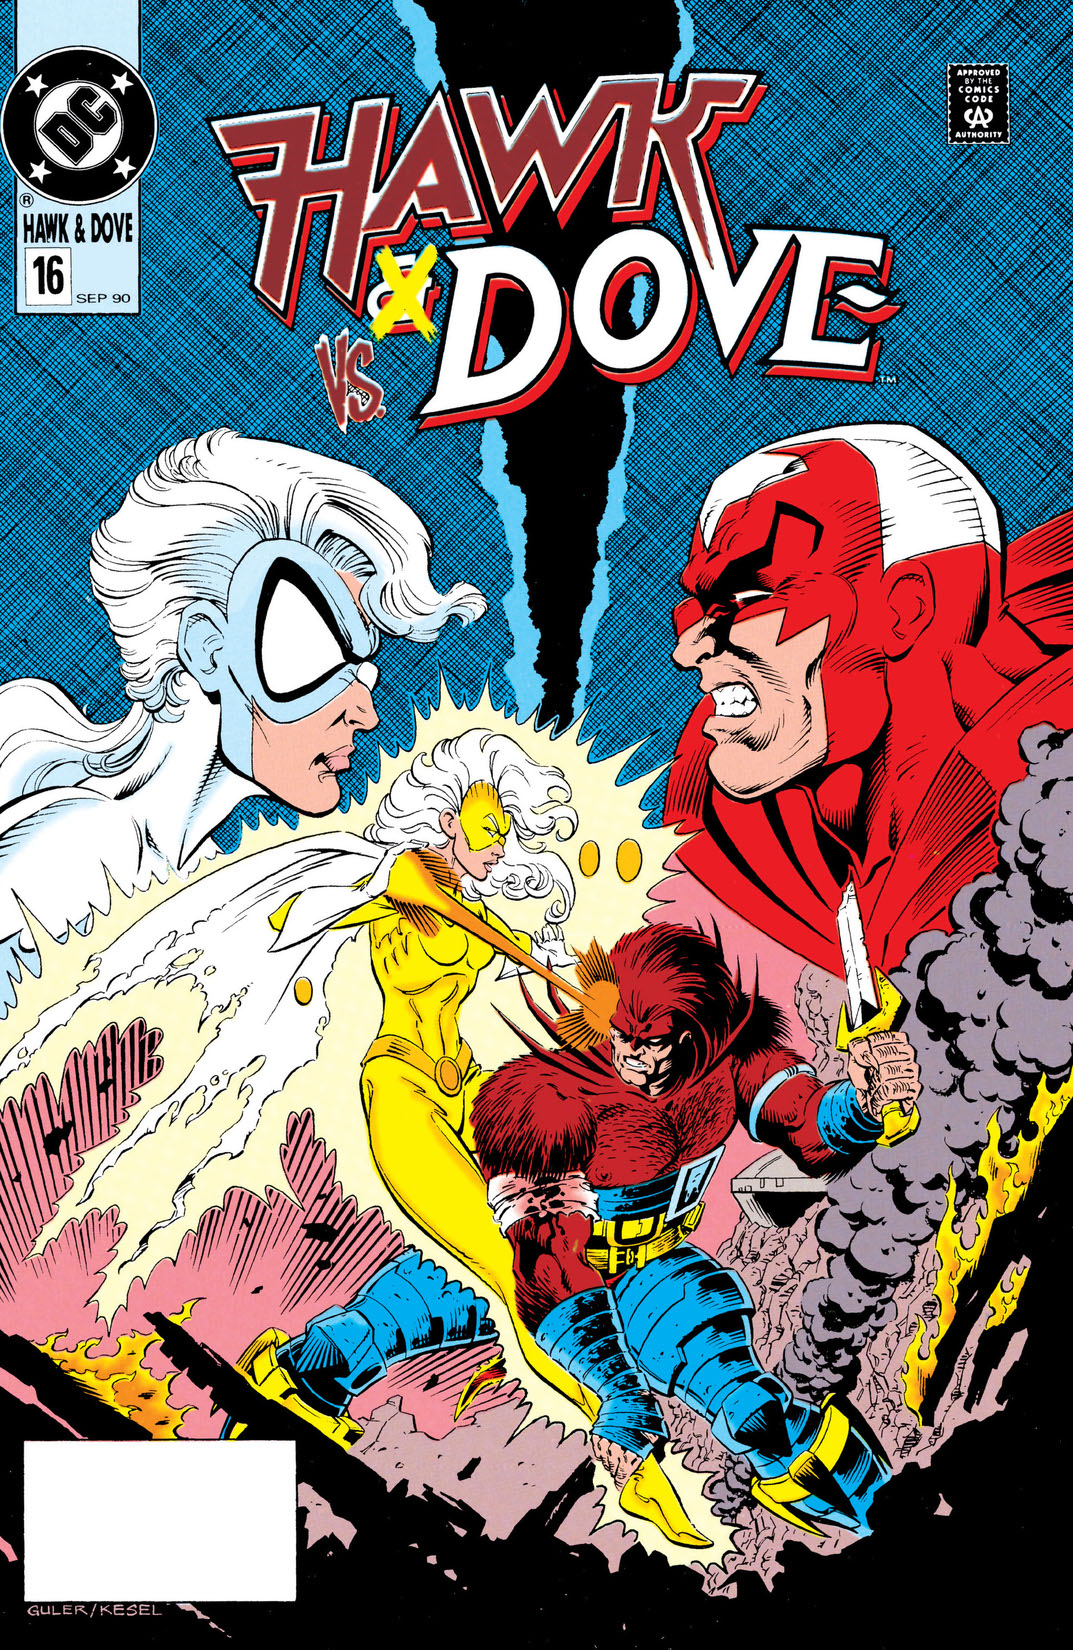 Hawk & Dove (1989-) #16 preview images